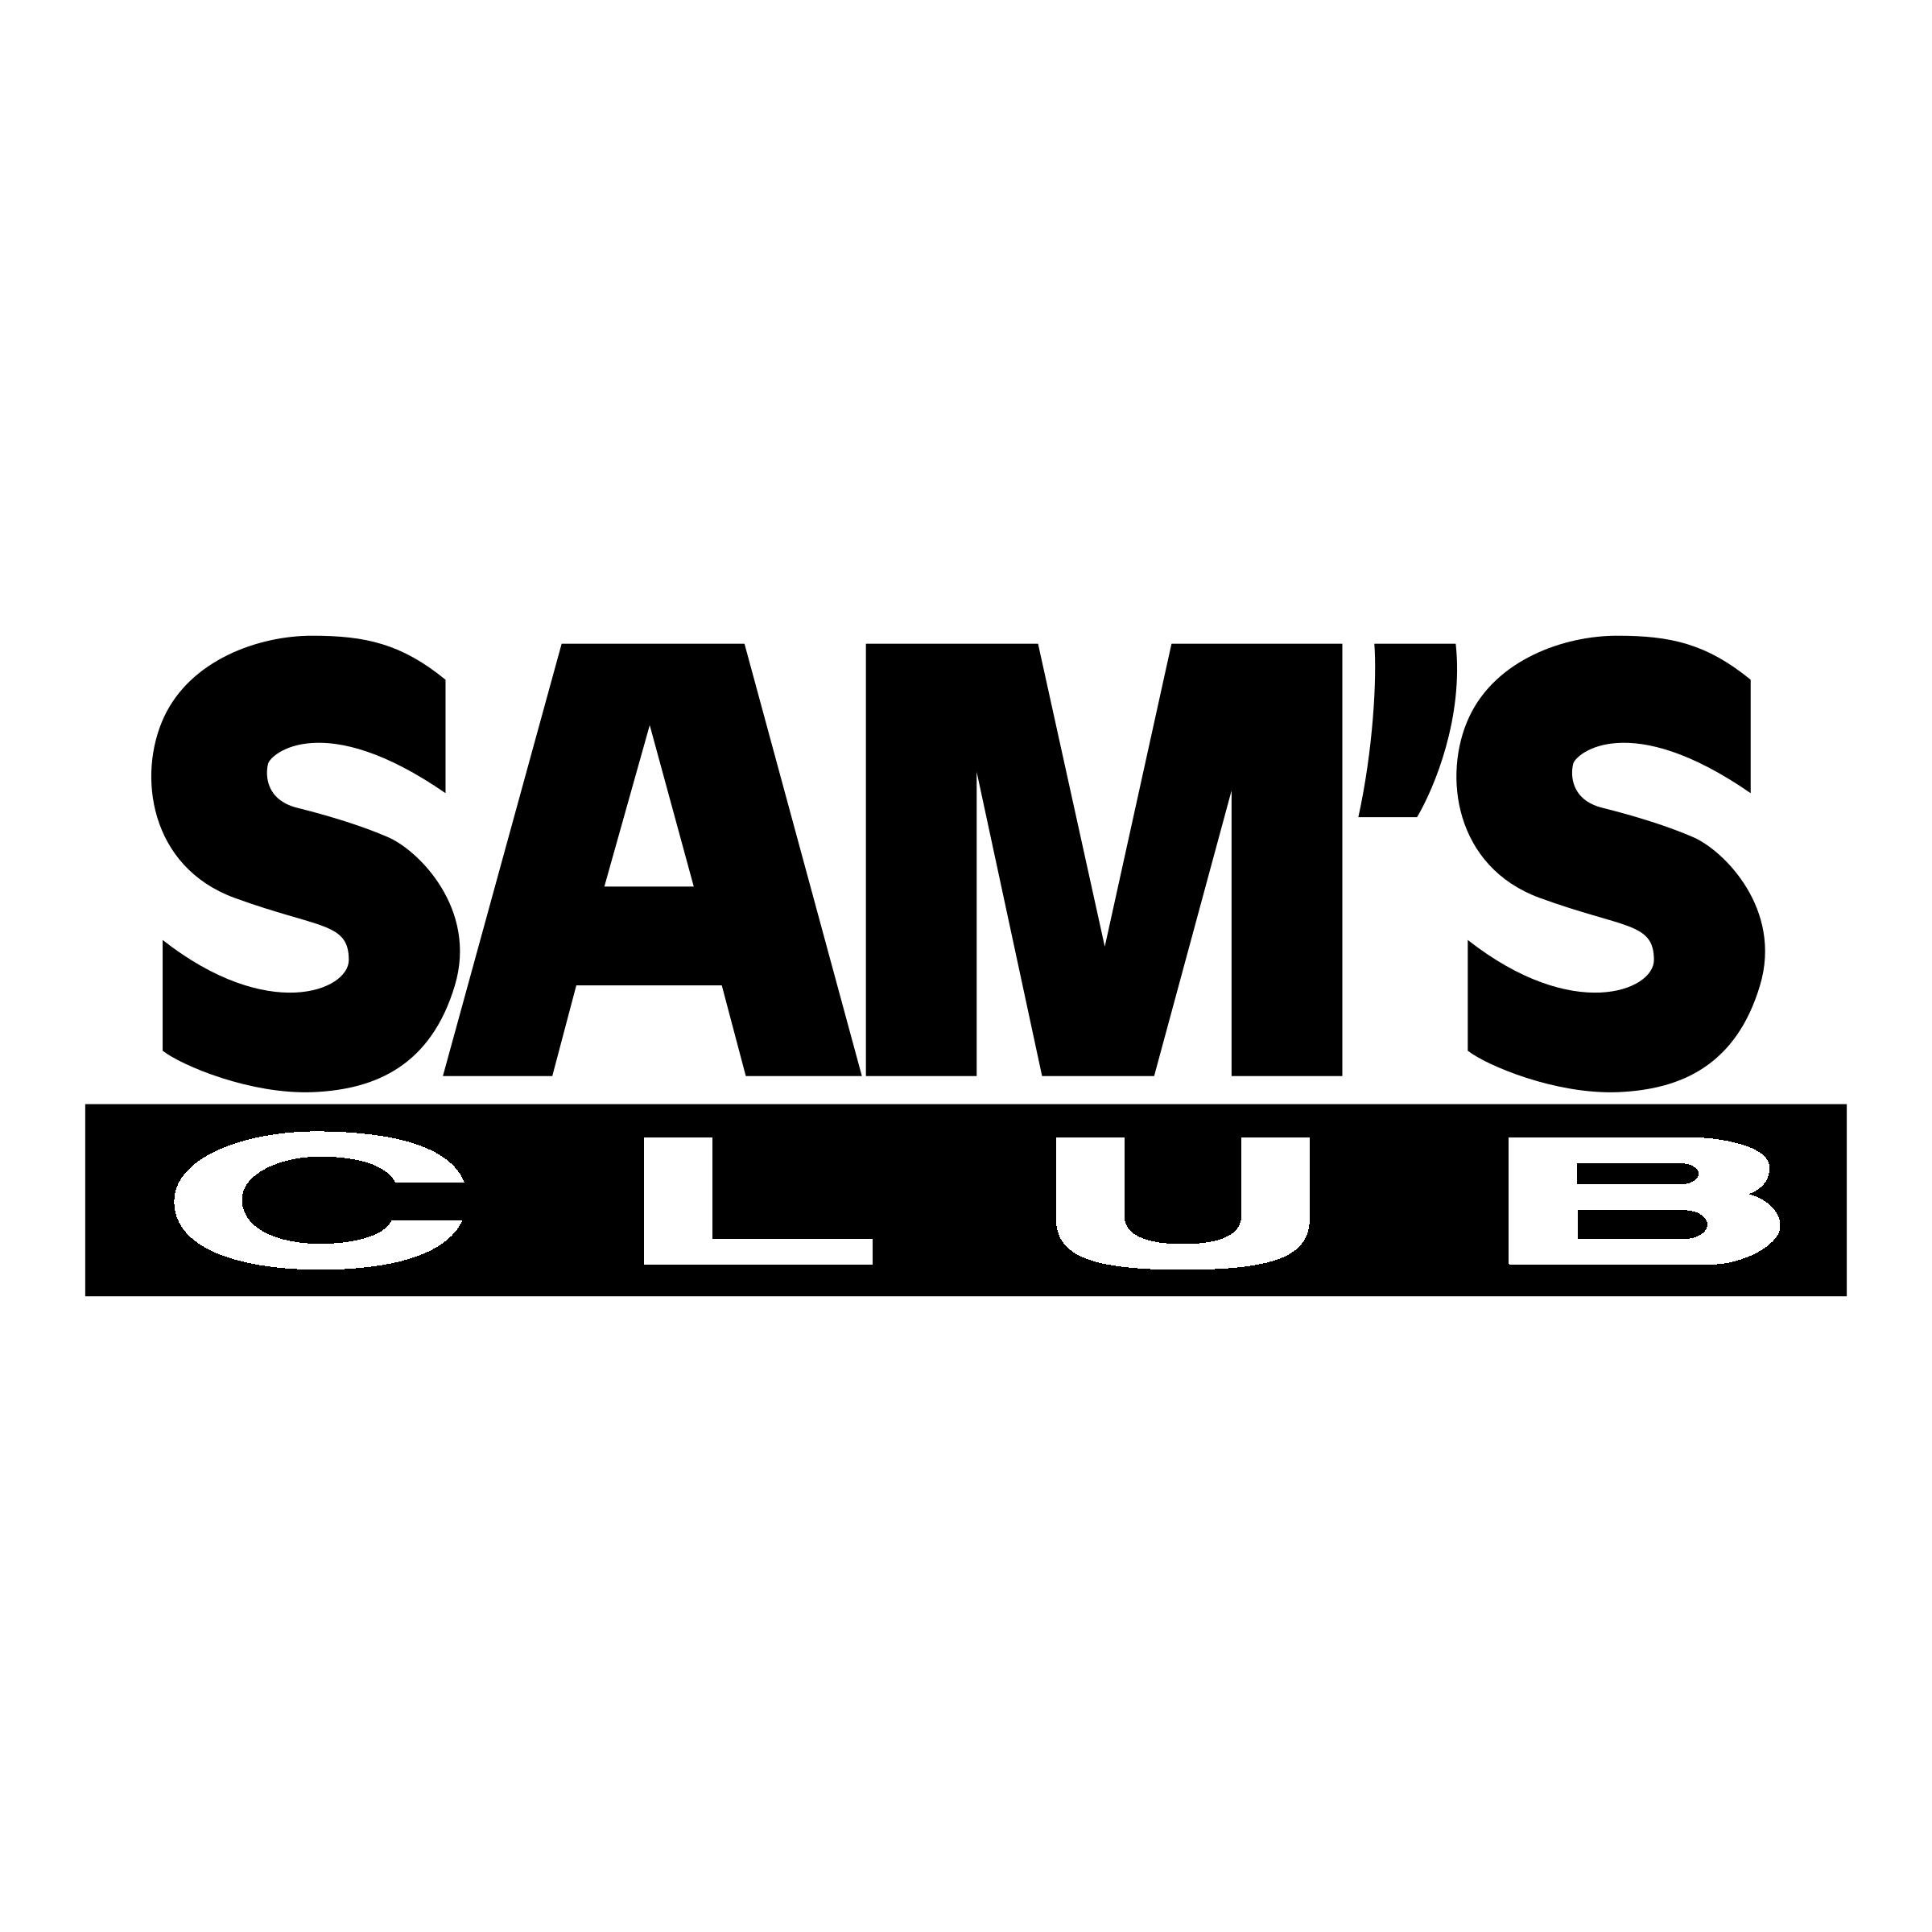 sams-club-logo-black-and-white